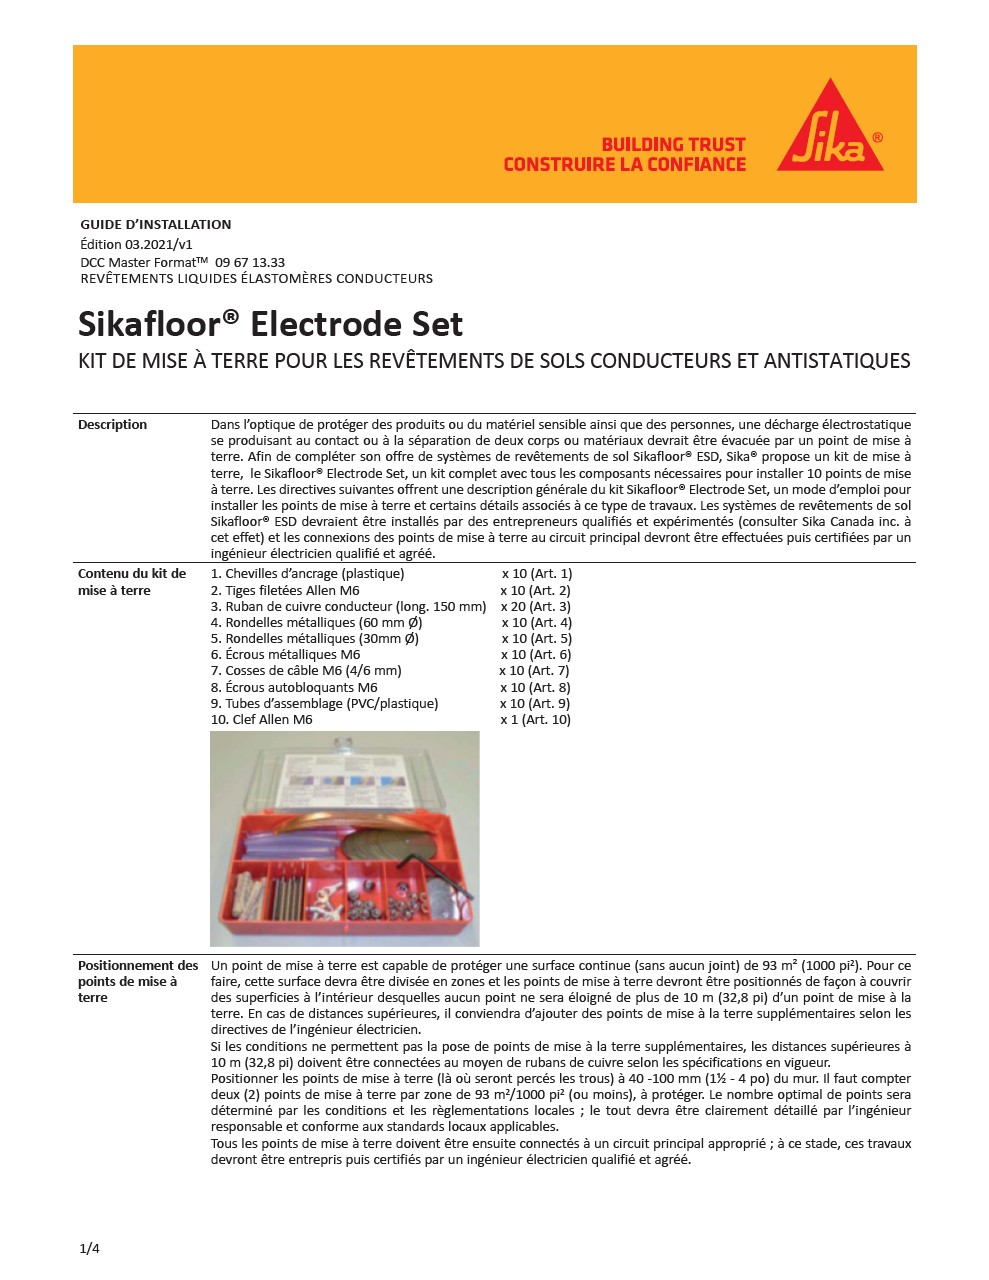 Sikafloor Electrode Set